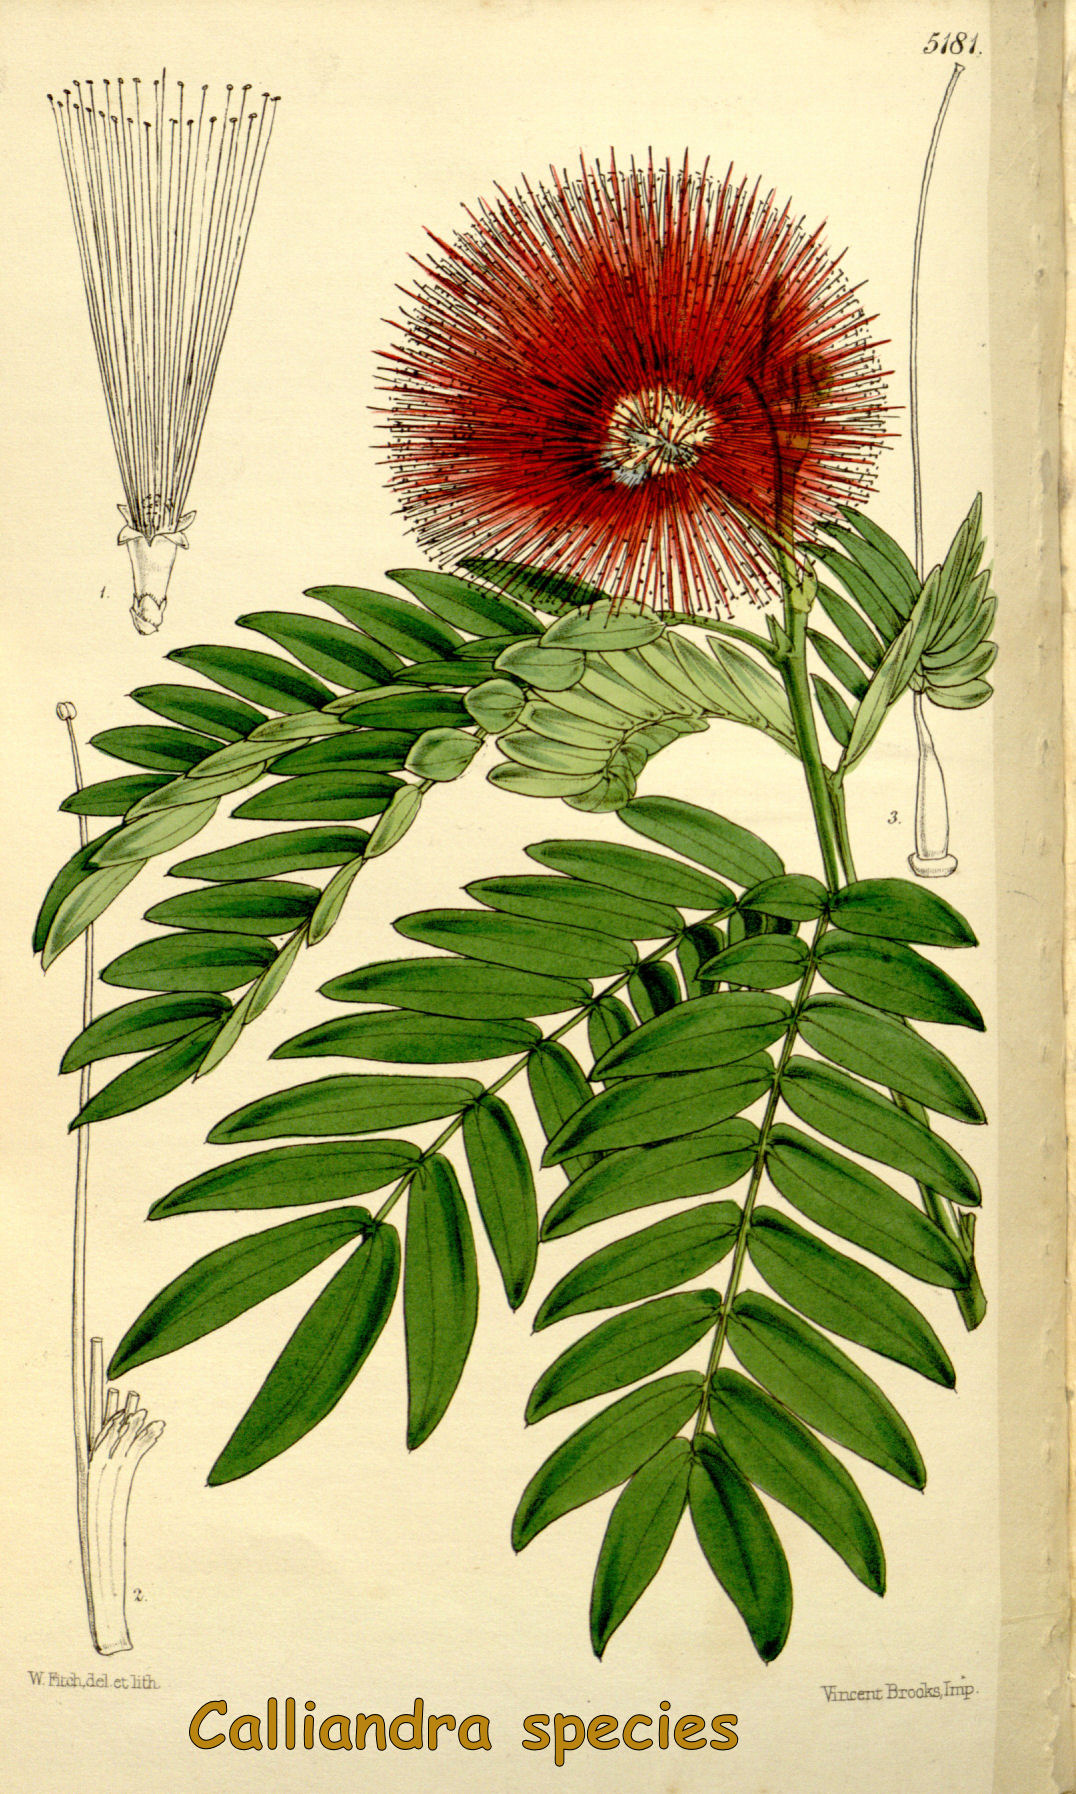 Calliandra species